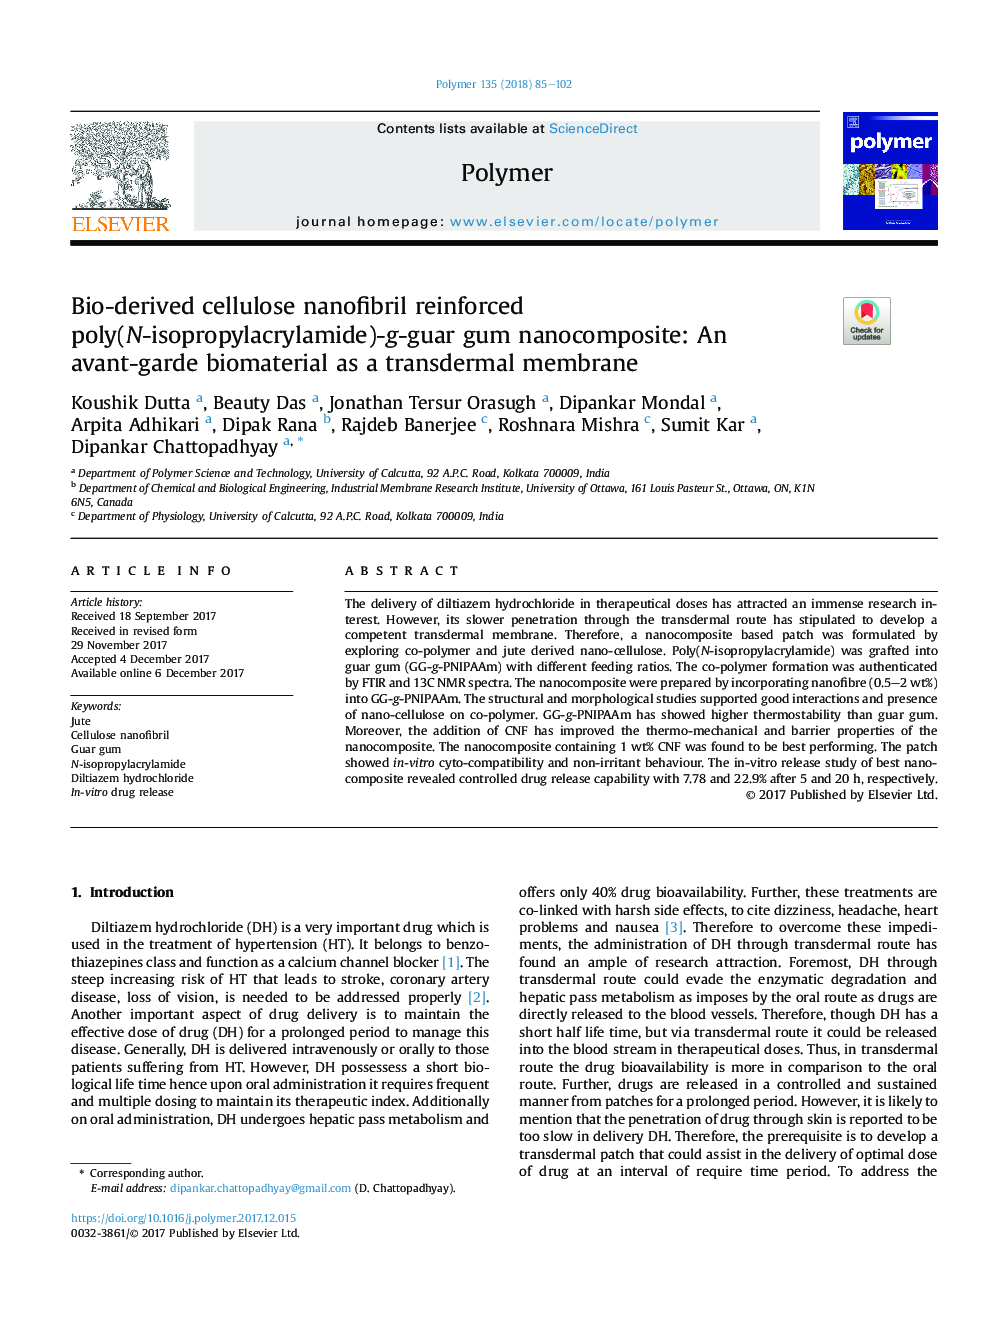 Bio-derived cellulose nanofibril reinforced poly(N-isopropylacrylamide)-g-guar gum nanocomposite: An avant-garde biomaterial as a transdermal membrane